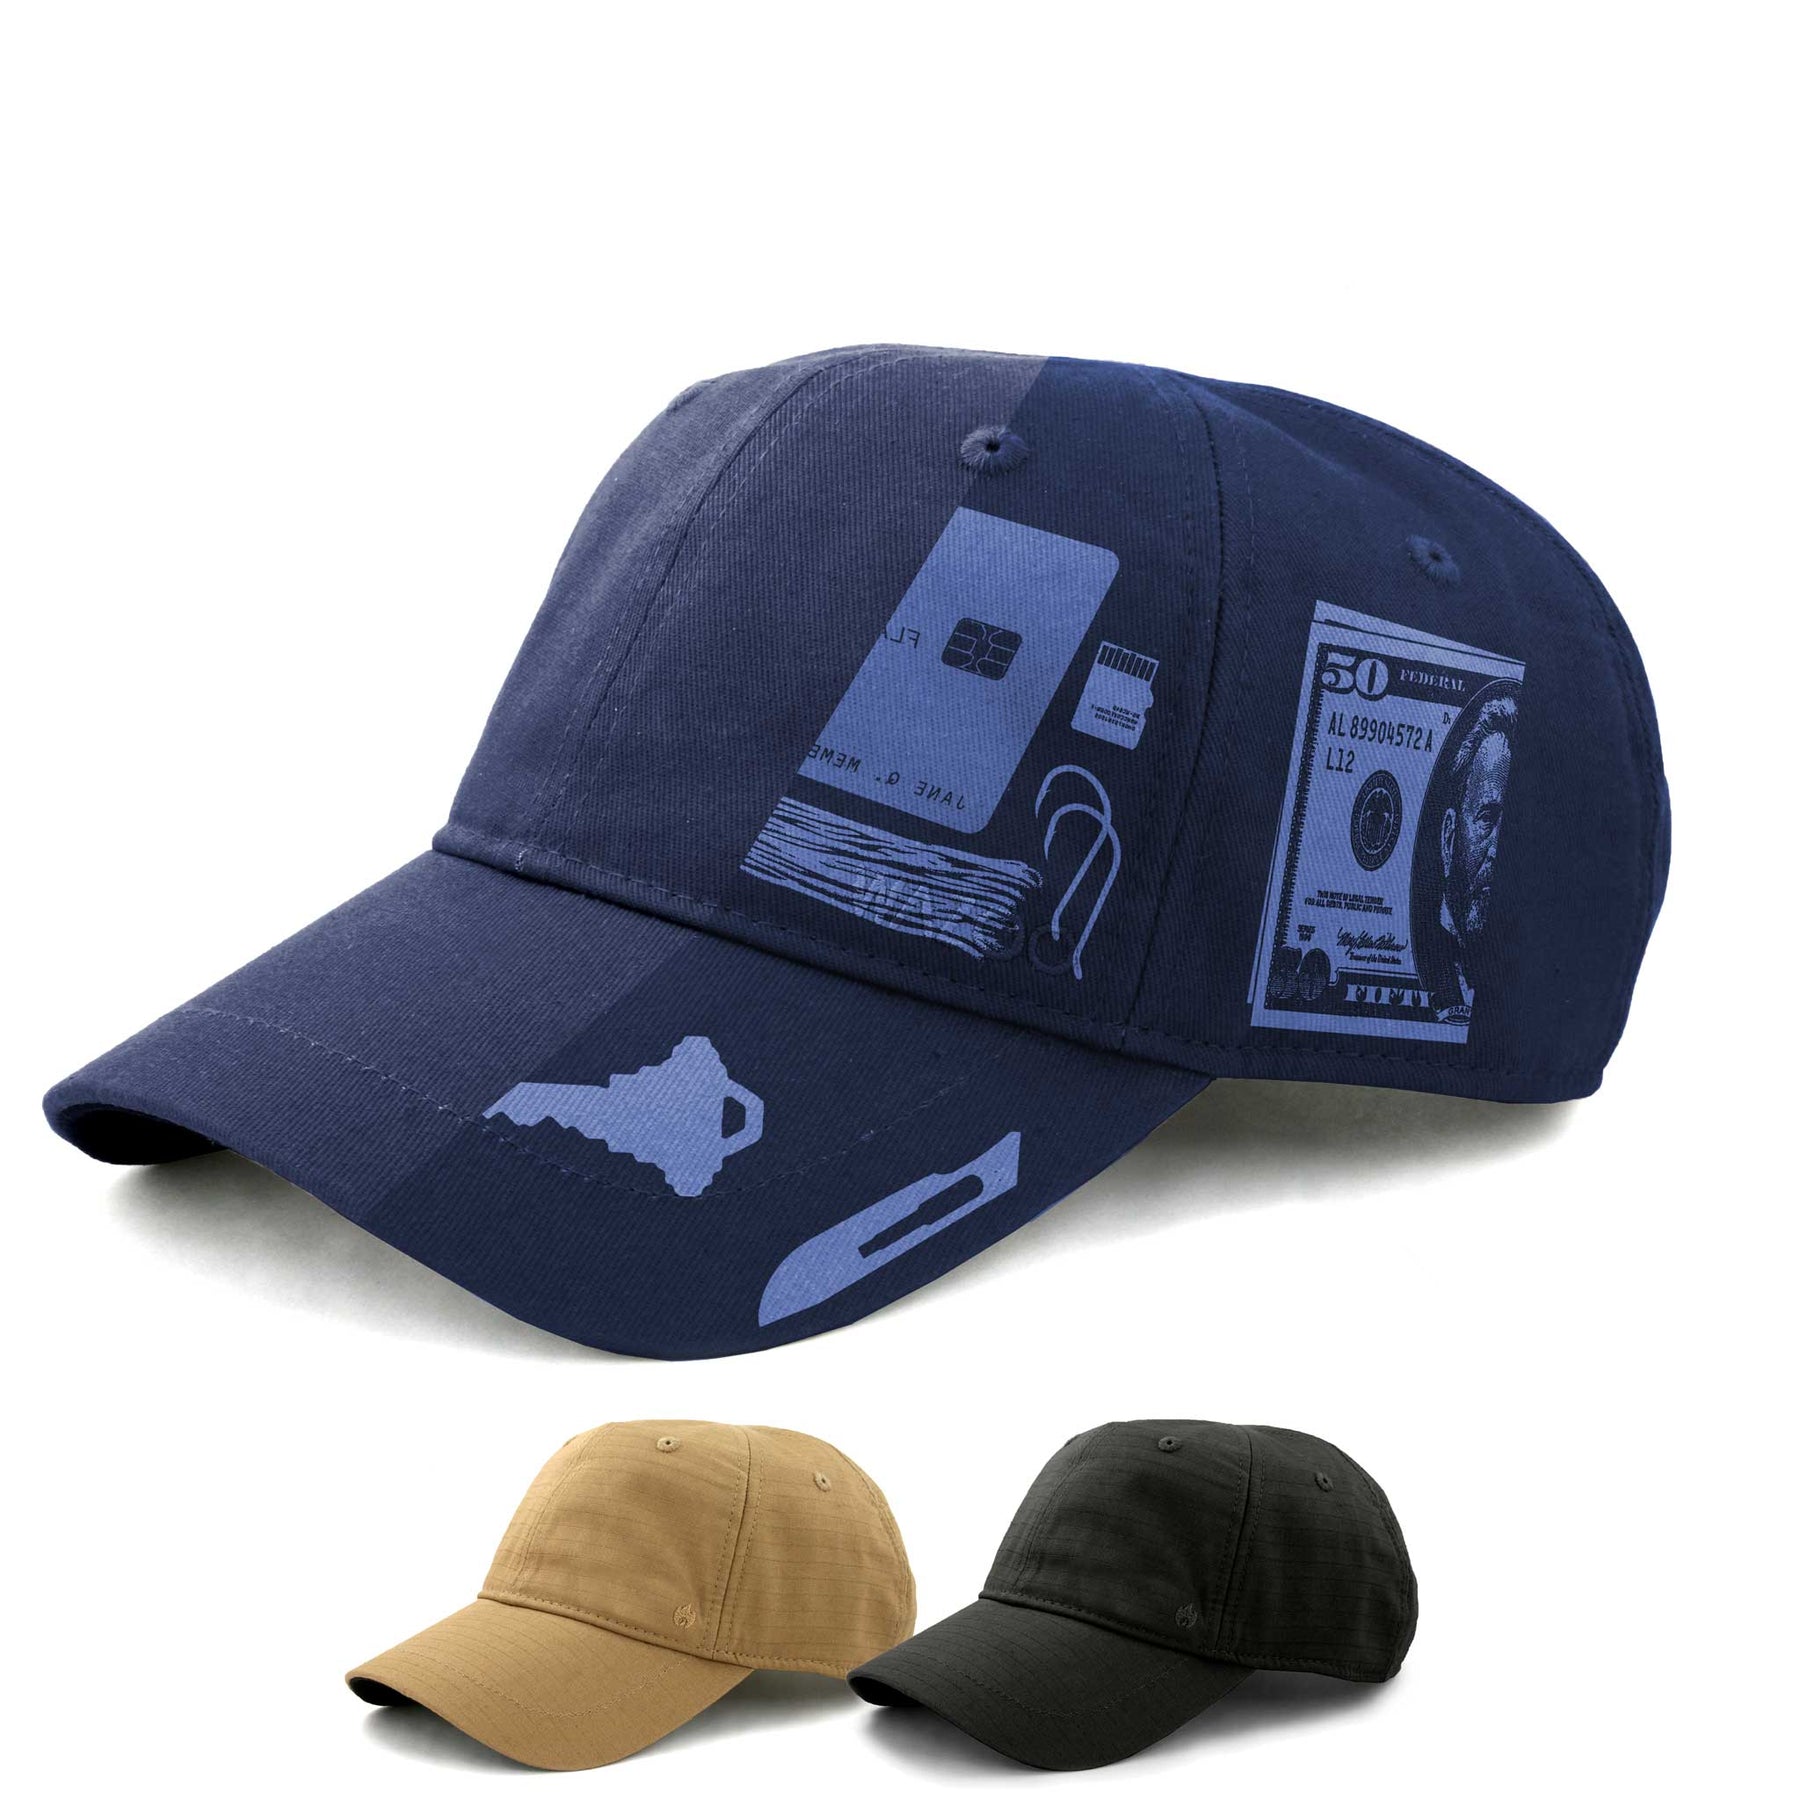 Cache Cap | Hat with Hidden Pockets | Wazoo Gear Tan